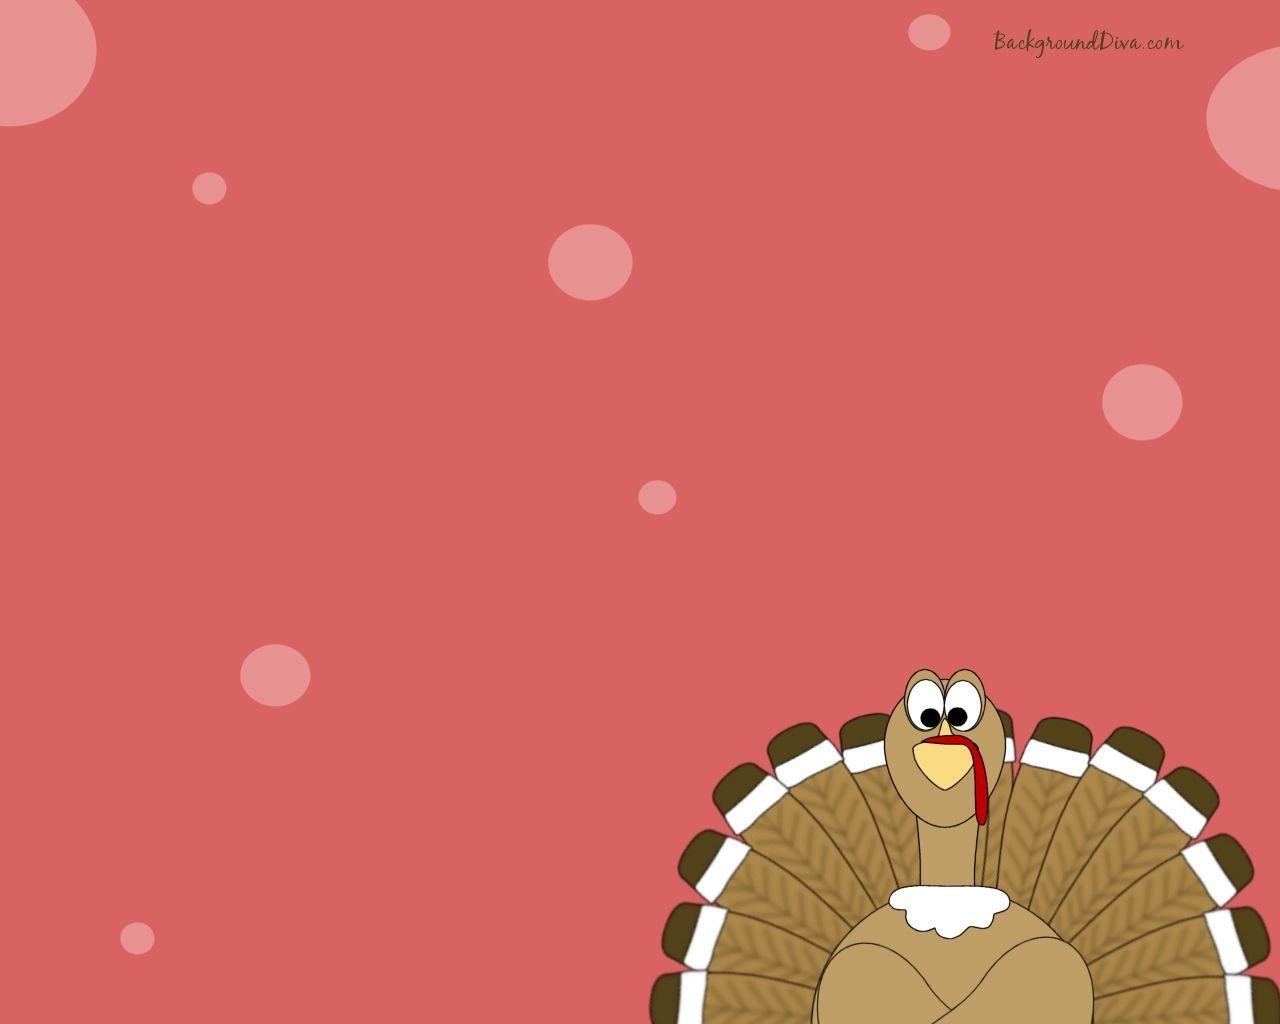 Free Thanksgiving Desktop Wallpaper Funny Picture 1440x900PX